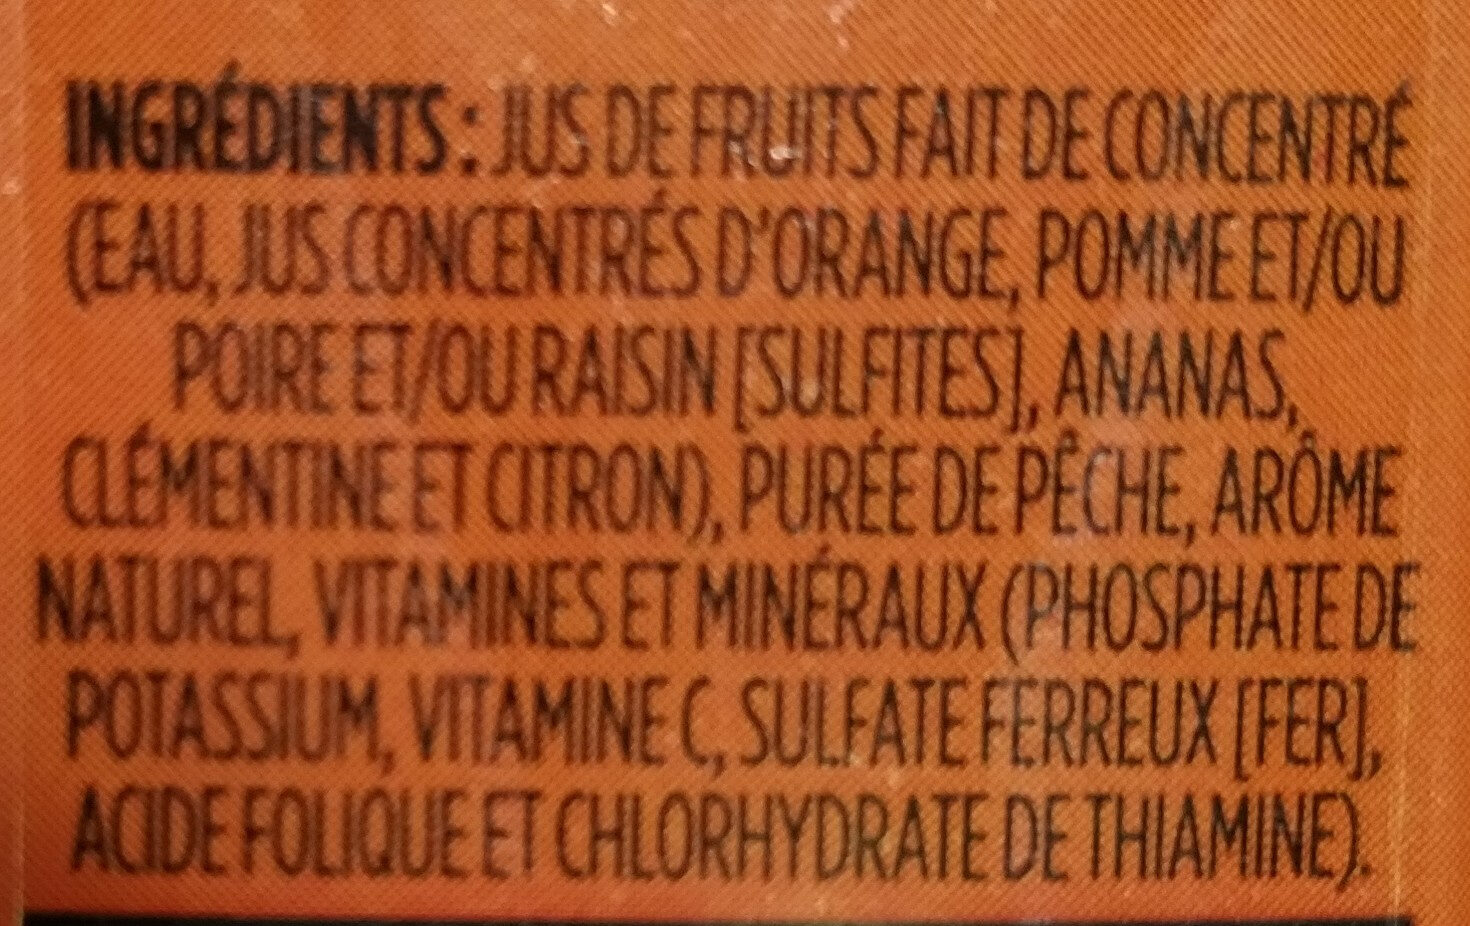 Oasis fruitzoo pêche clémentine - Ingredients - fr